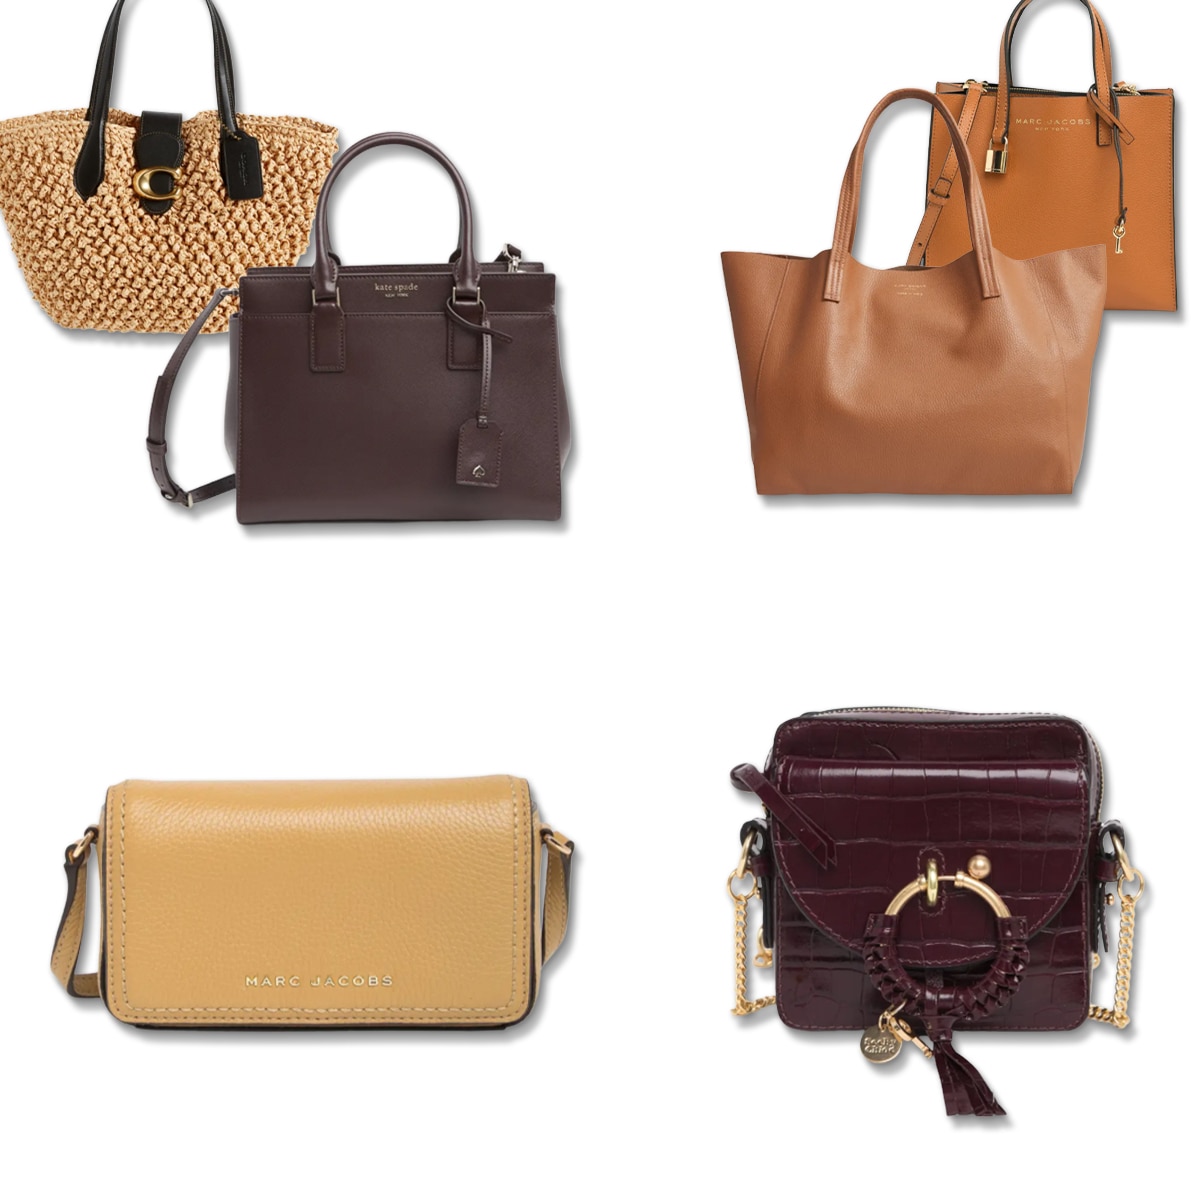 Up to 70 Off Designer Handbags  Nordstrom Rack Nordstrom Rack   DealsPlus  Bags Purses Women handbags